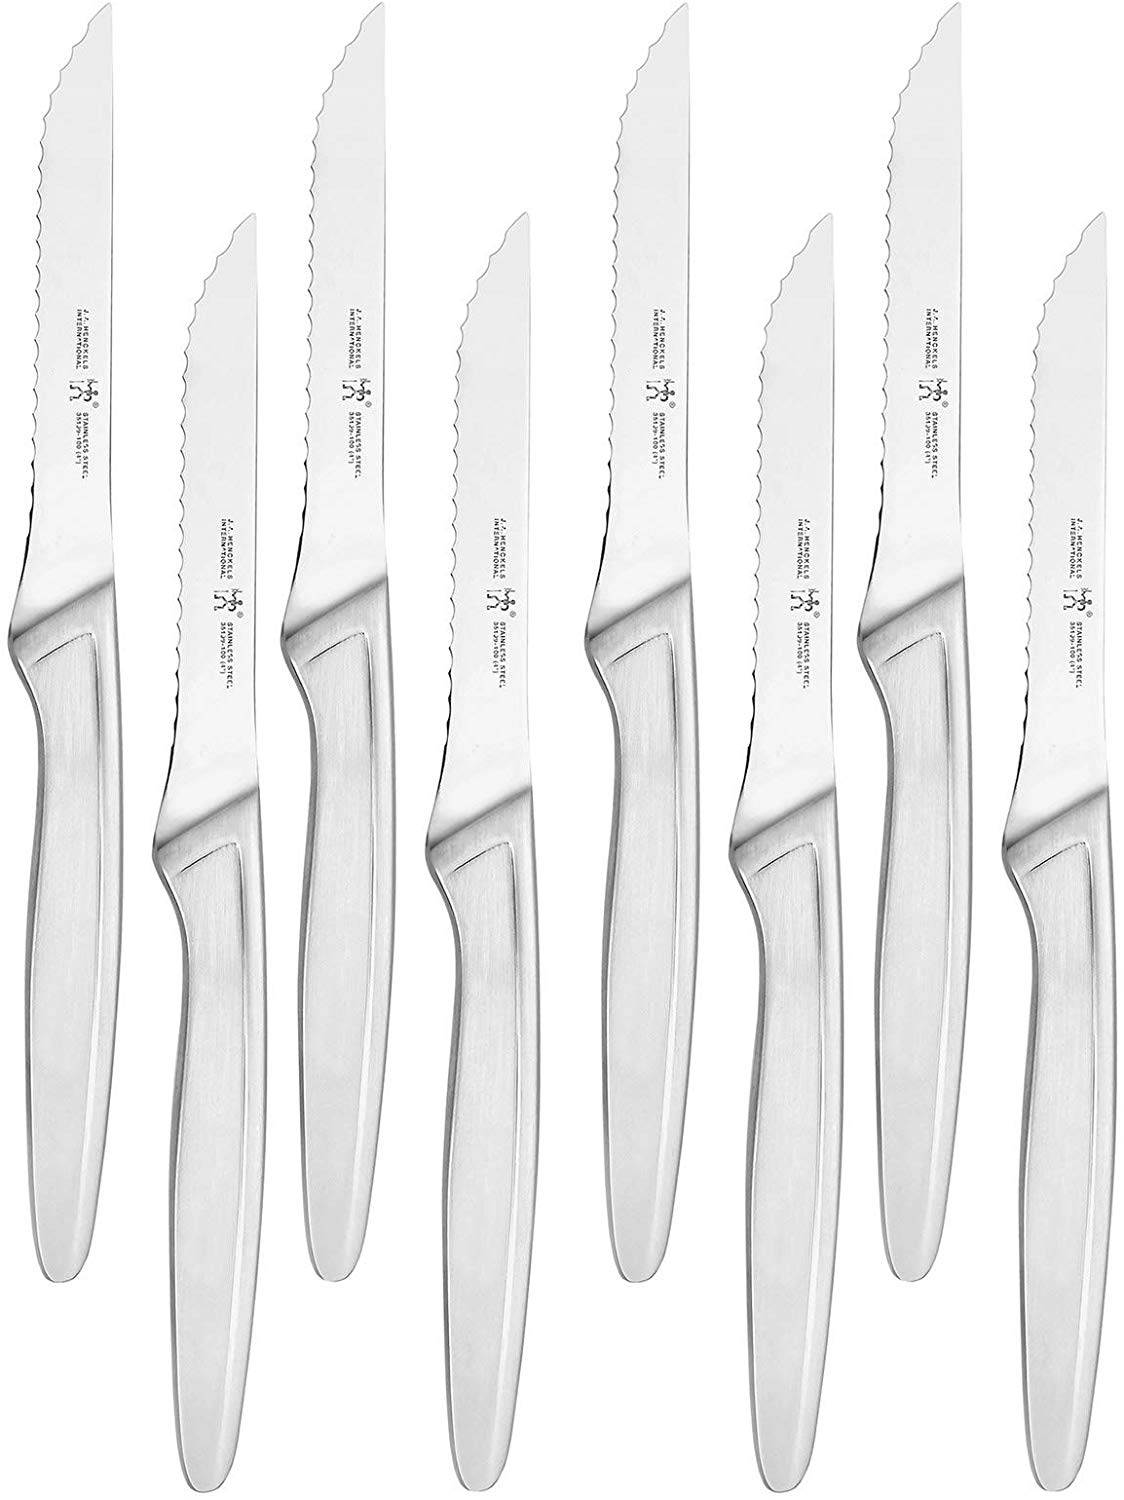 HENCKELS Serrated Edge Steak Knife Set, 8-Piece